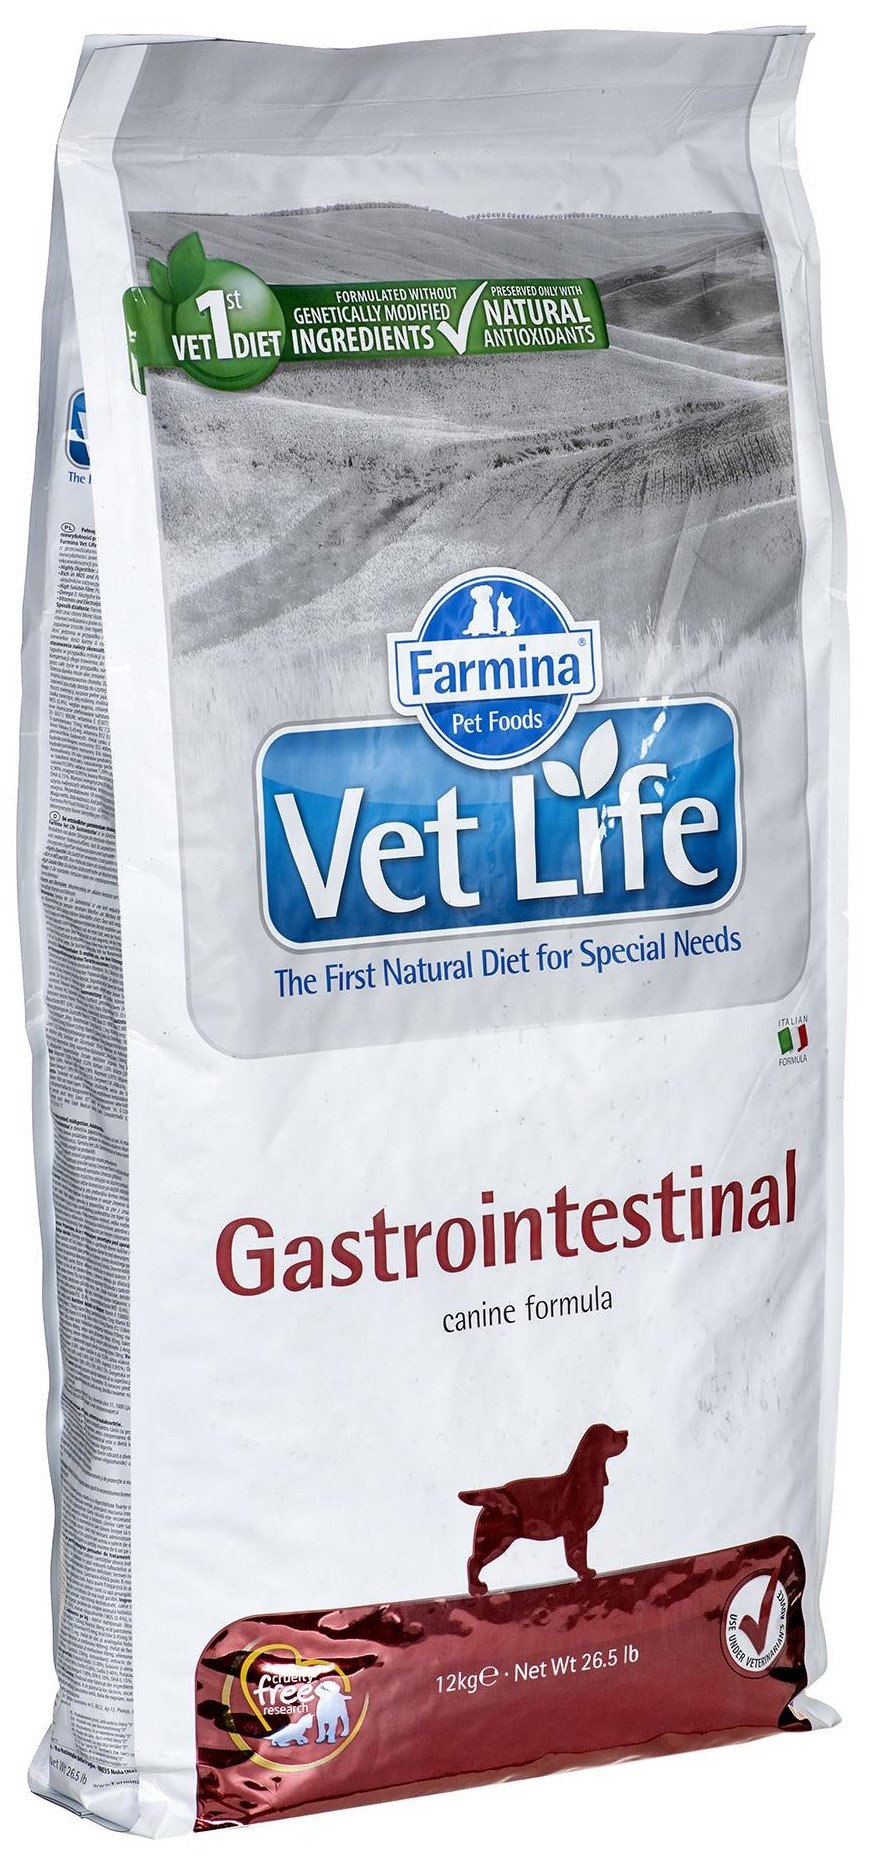 Корм farmina vet life gastrointestinal. Корм для собак Фармина Gastrointestinal 12 кг. Vet Life Gastrointestinal корм для собак. Farmina гастро для собак. Vet Life hepatic корм для собак 12кг.